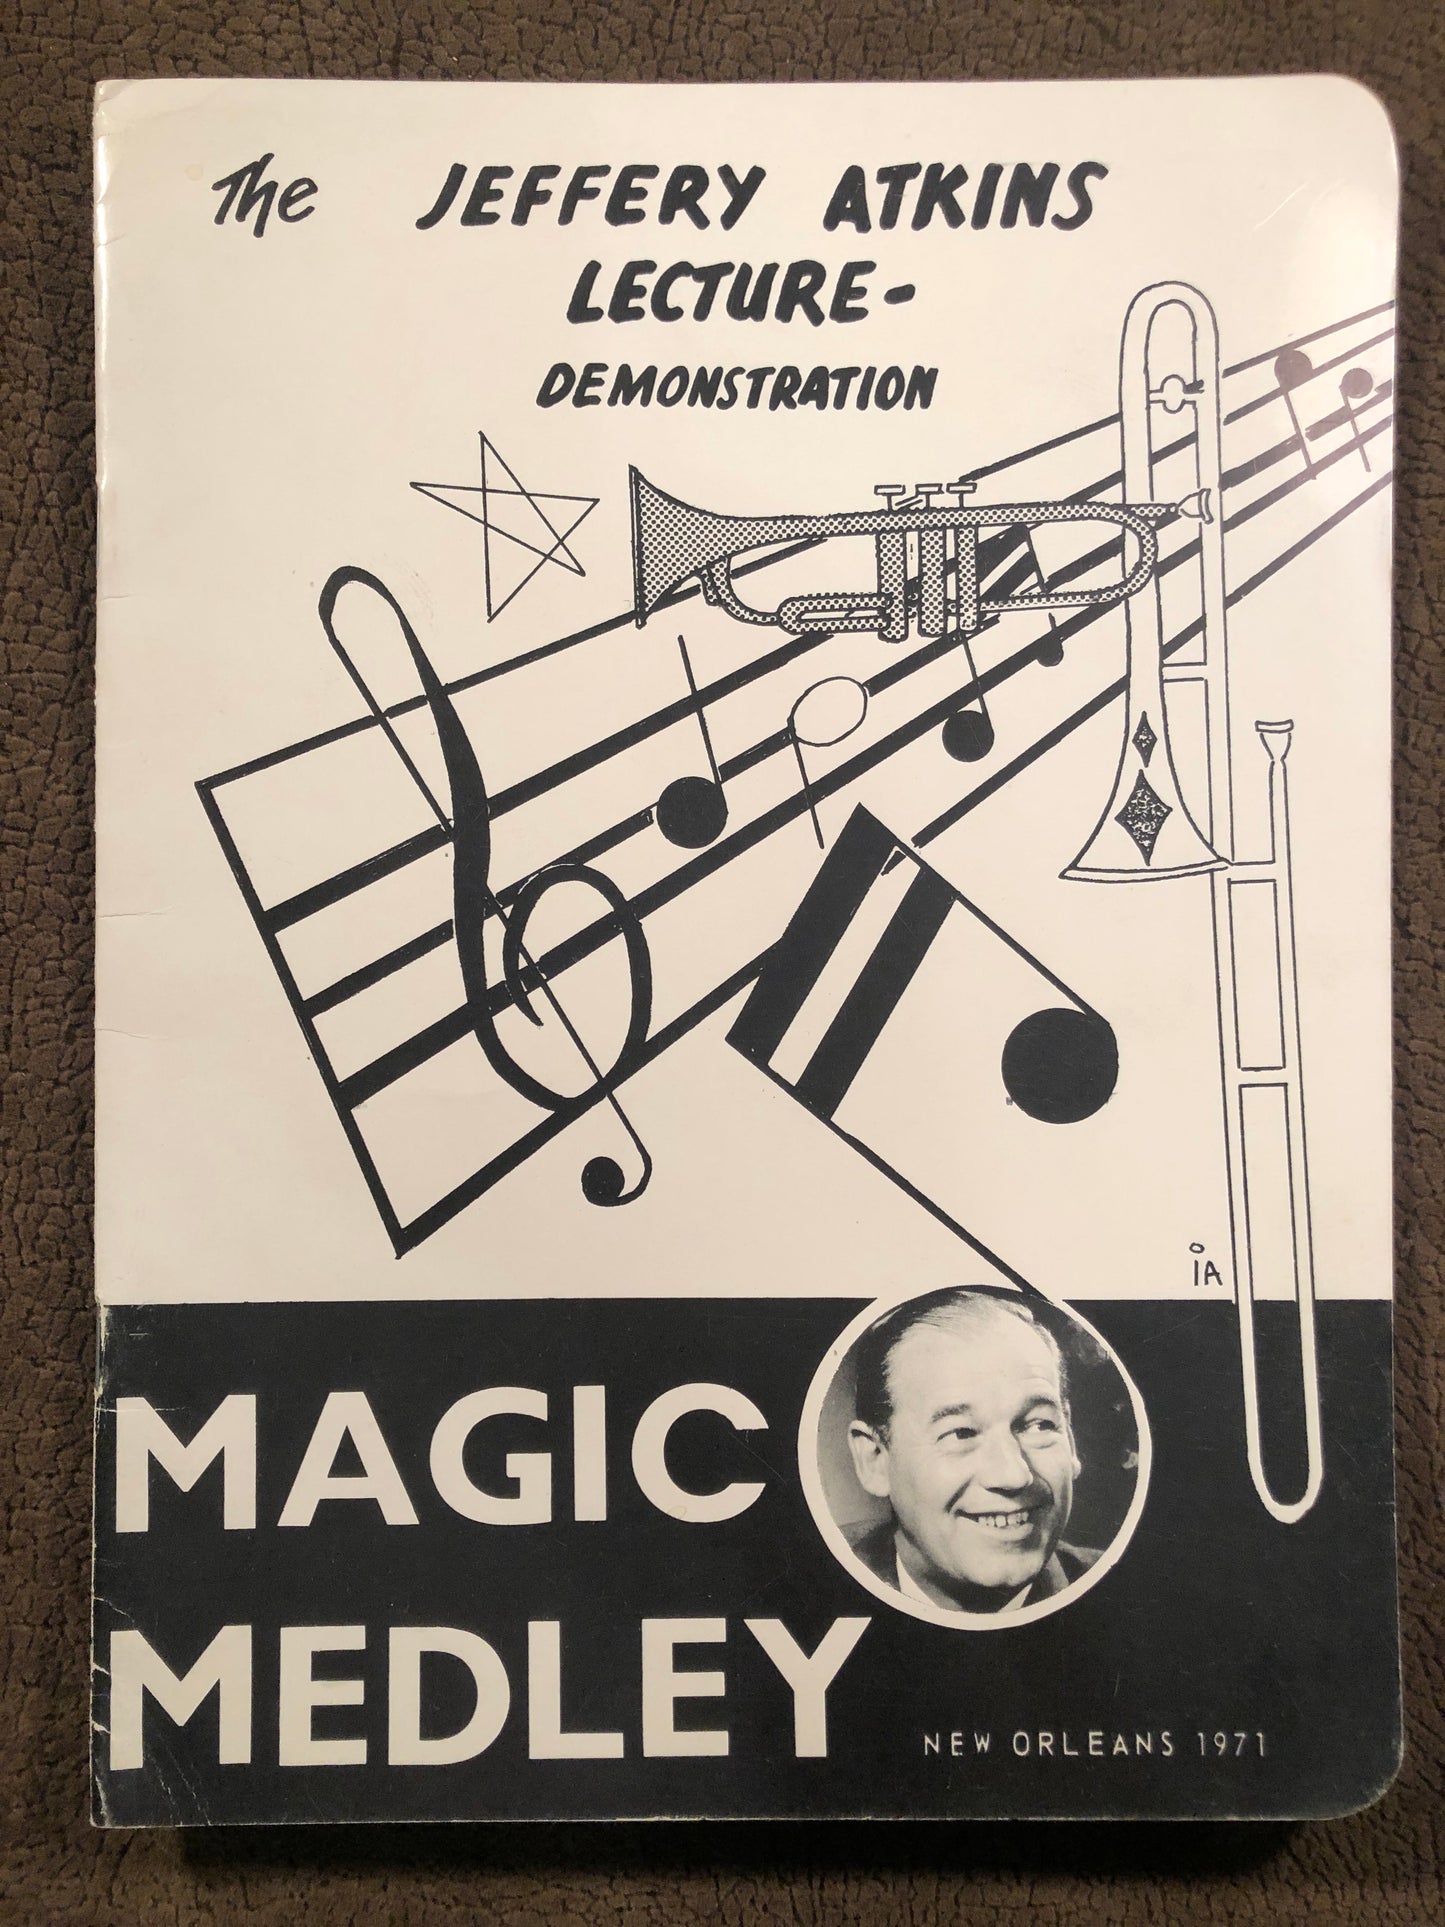 Magic Medley - Jeffery Atkins Lecture/Demonstration